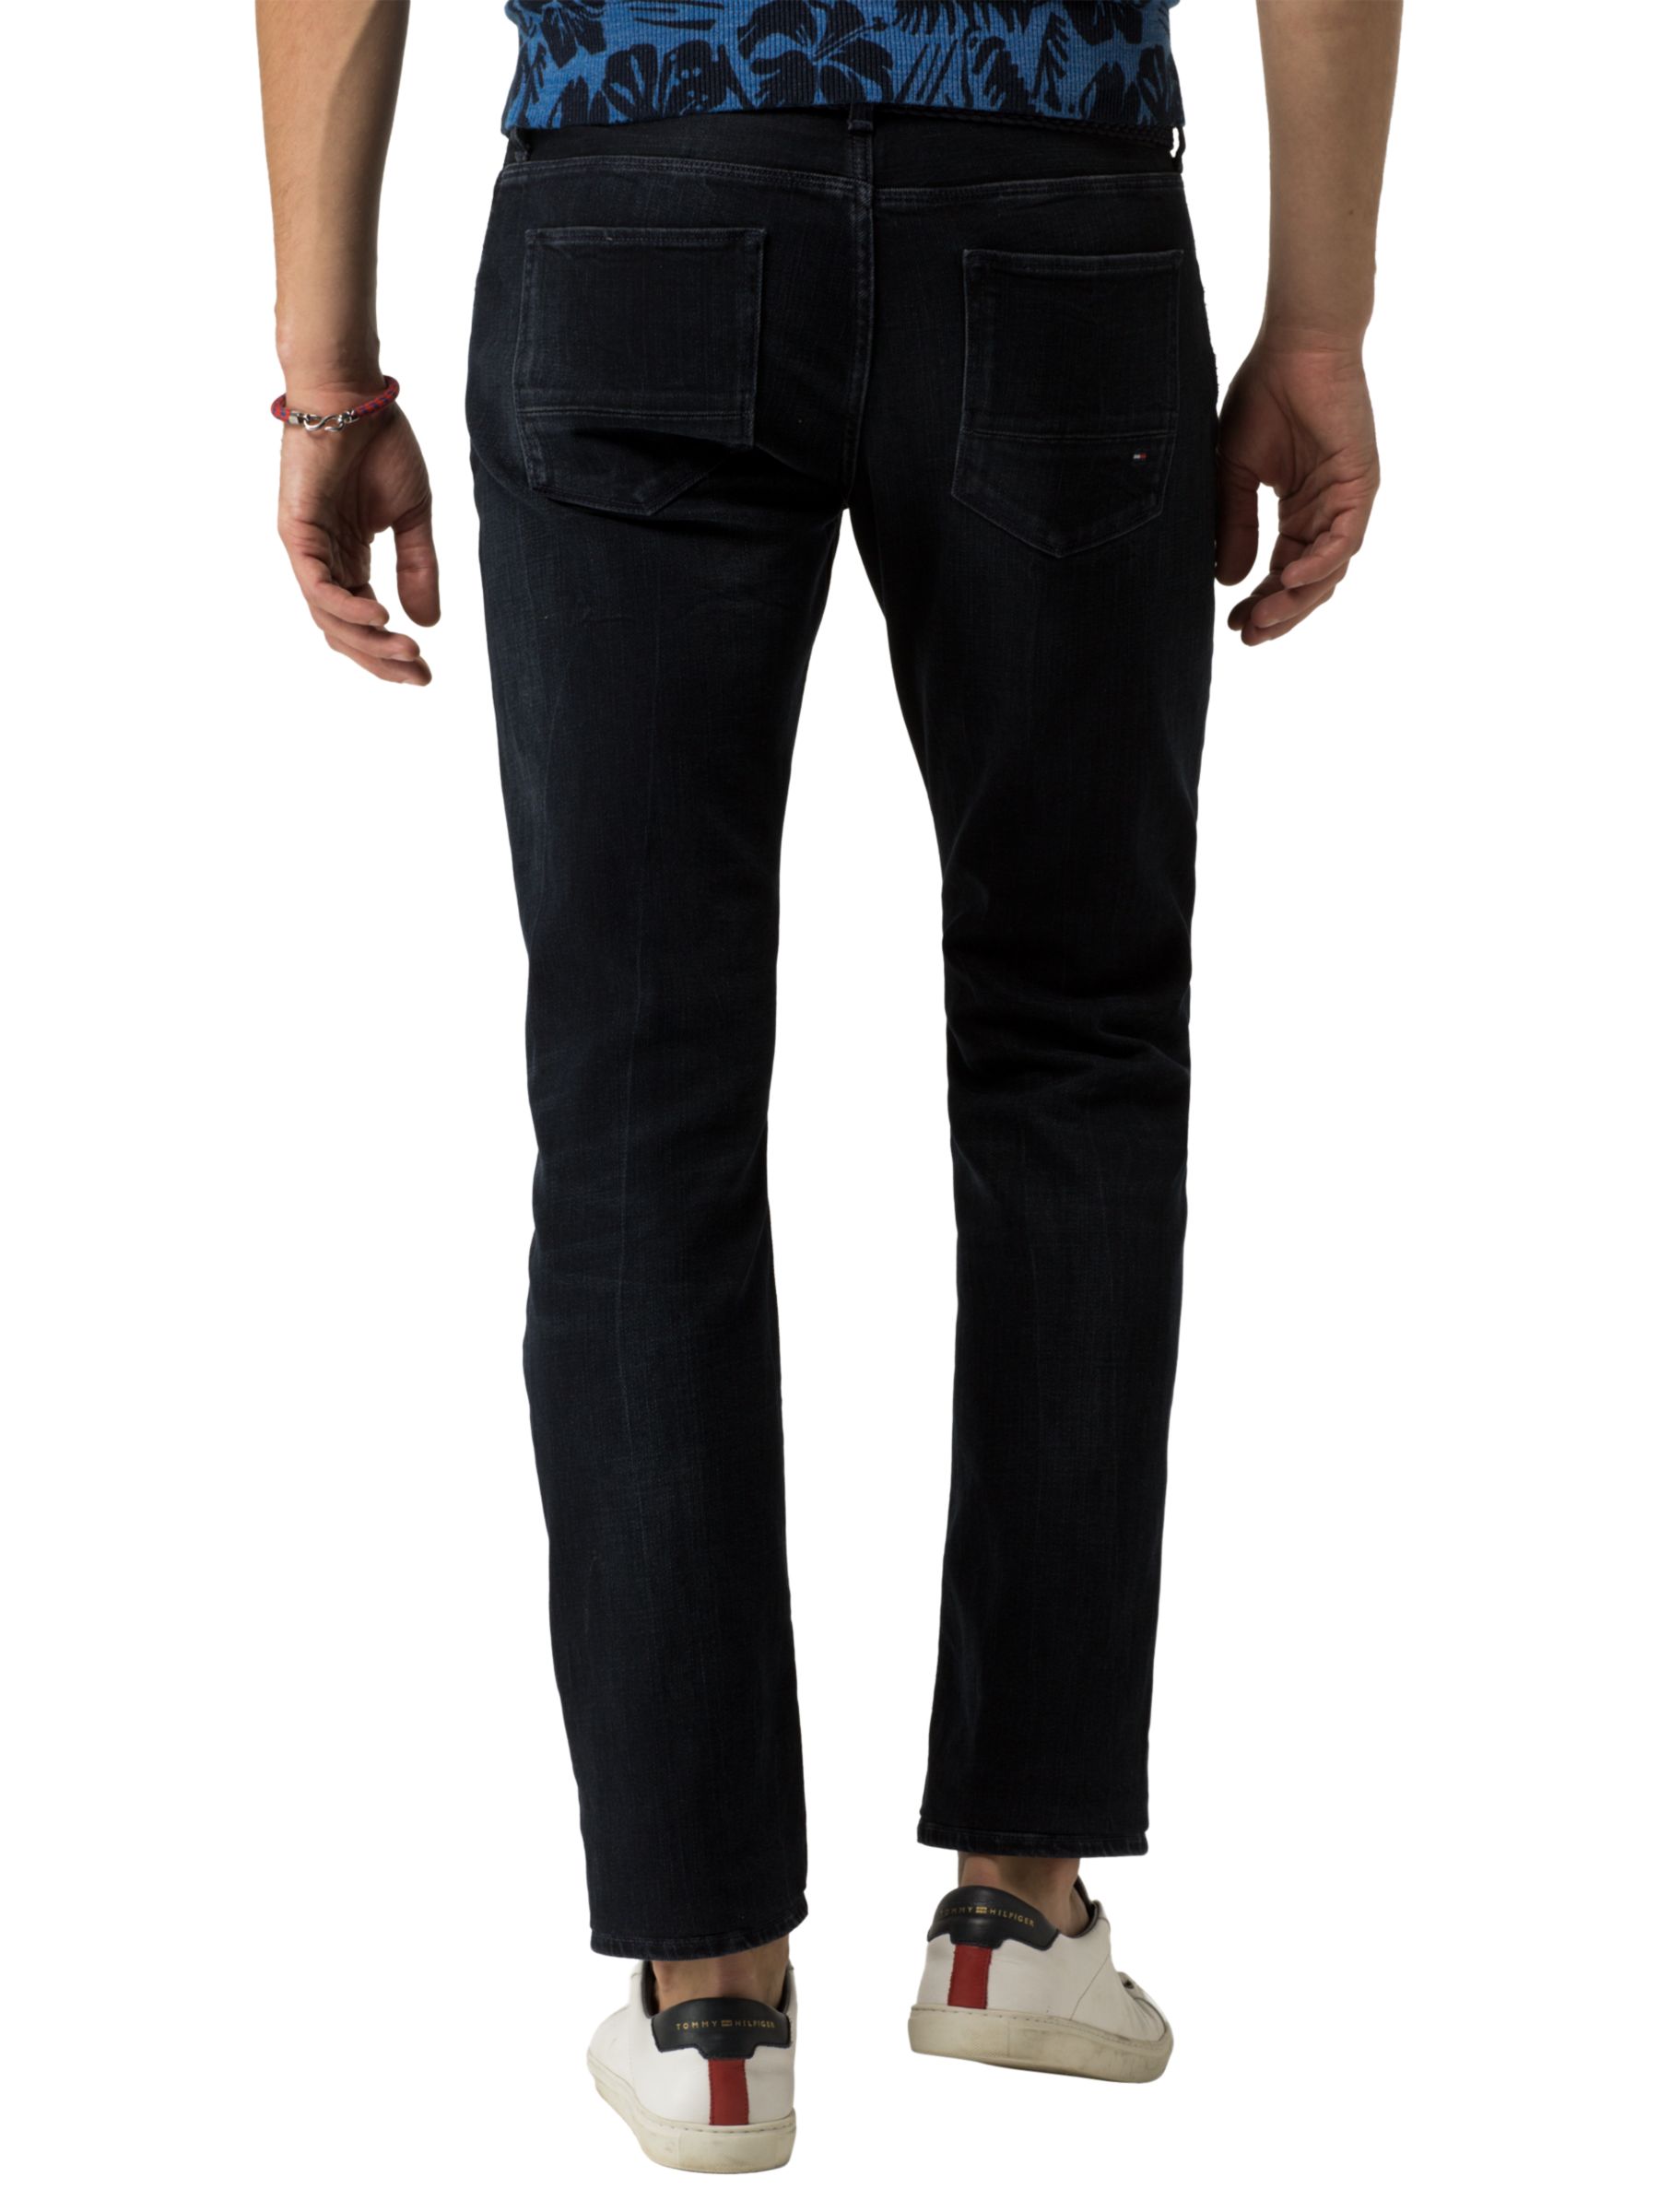 hilfiger jeans denton straight fit